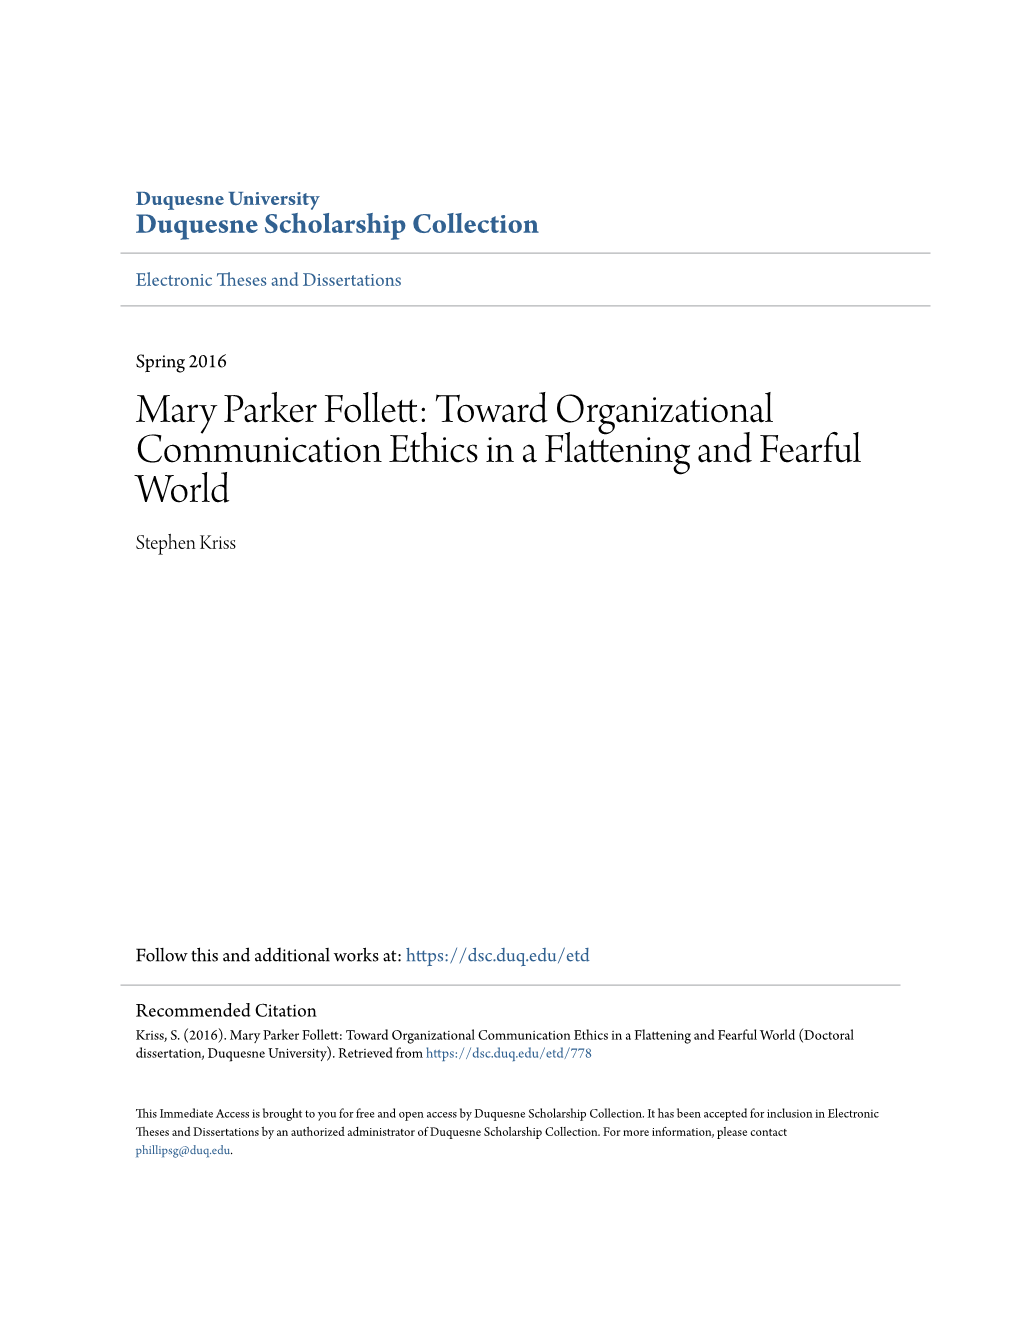 Mary Parker Follett: Toward Organizational Communication Ethics in a Flattening and Fearful World Stephen Kriss